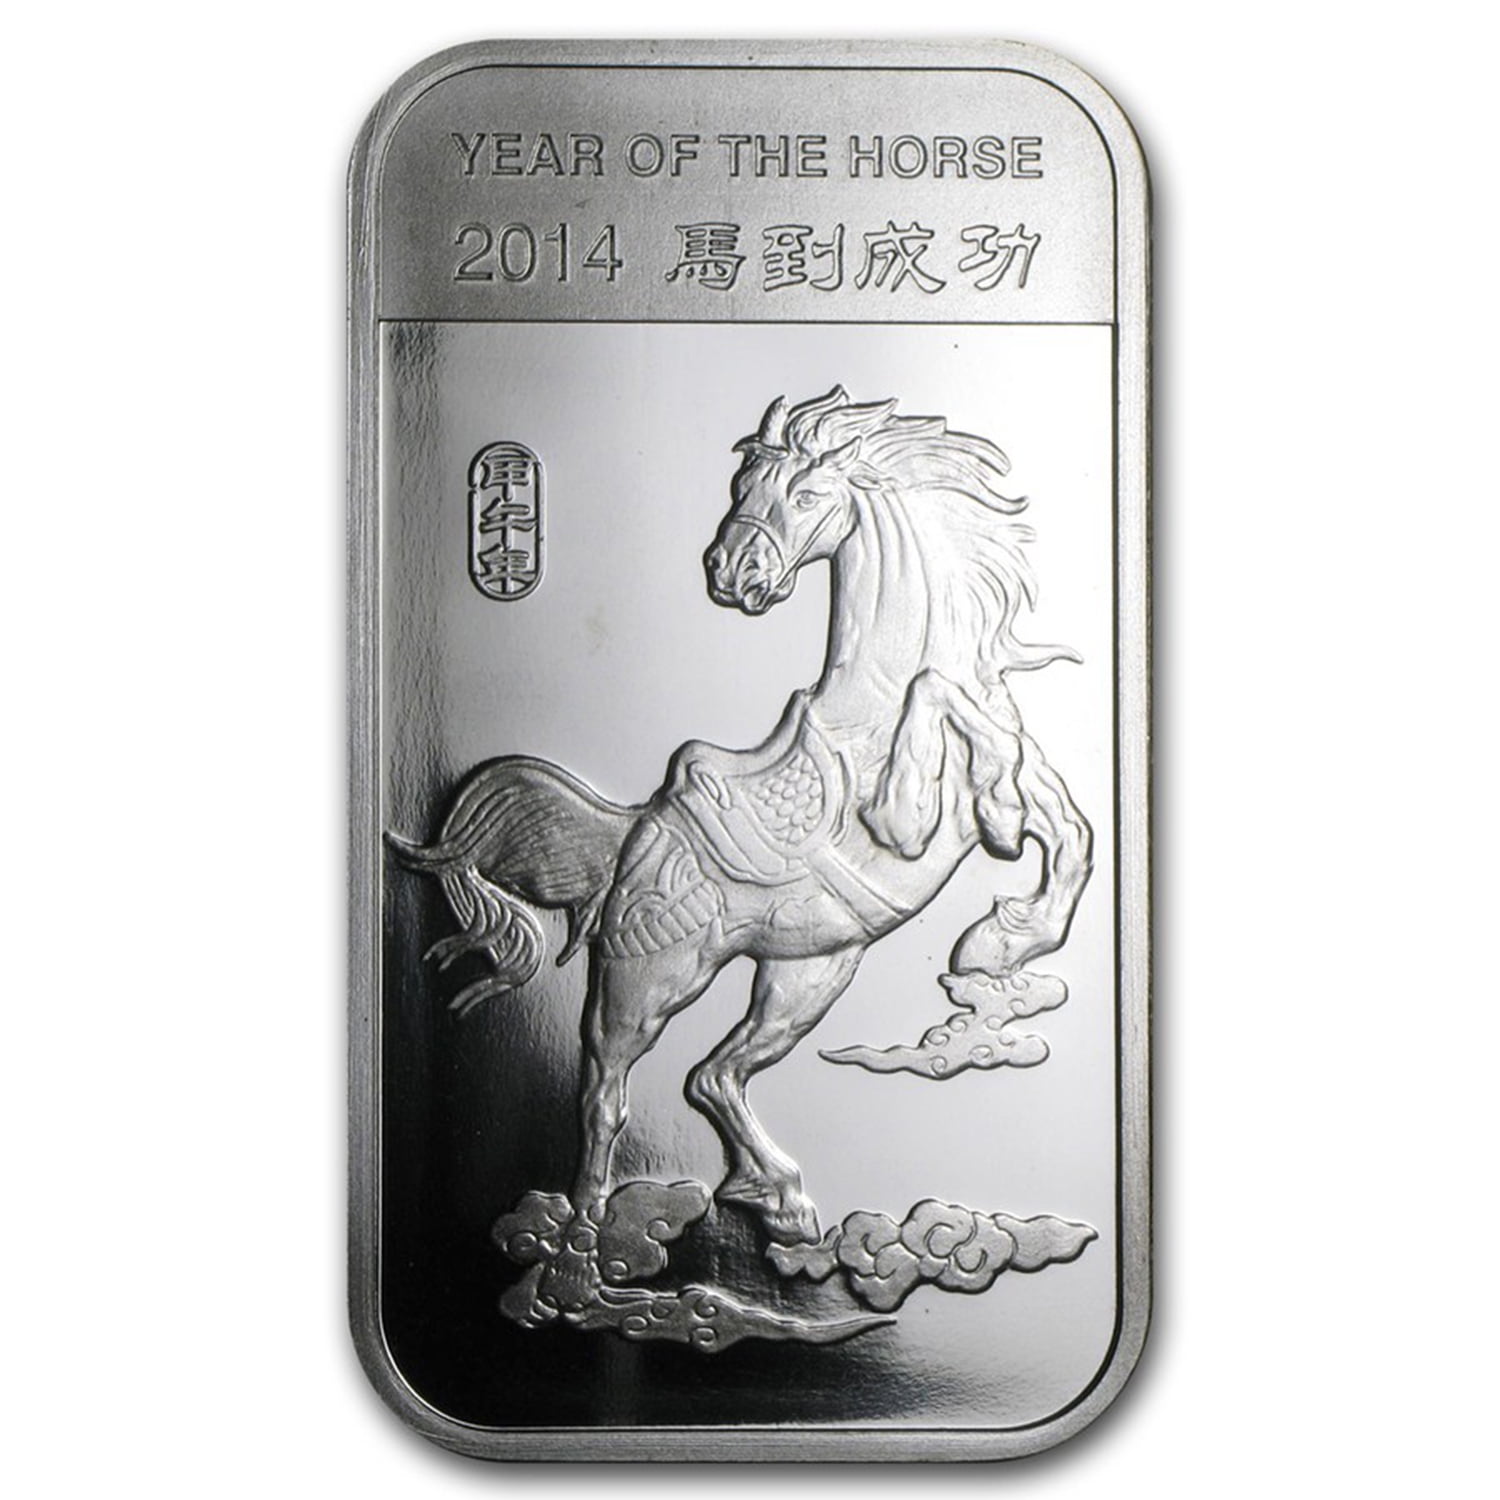 Хорс серебряный. Барс серебряная монета 1 унция. The year of Horse 2014 монета. Монета год лошади 2014 серебро. Лошадь на монетах b ckbnrf[ abuehrf.